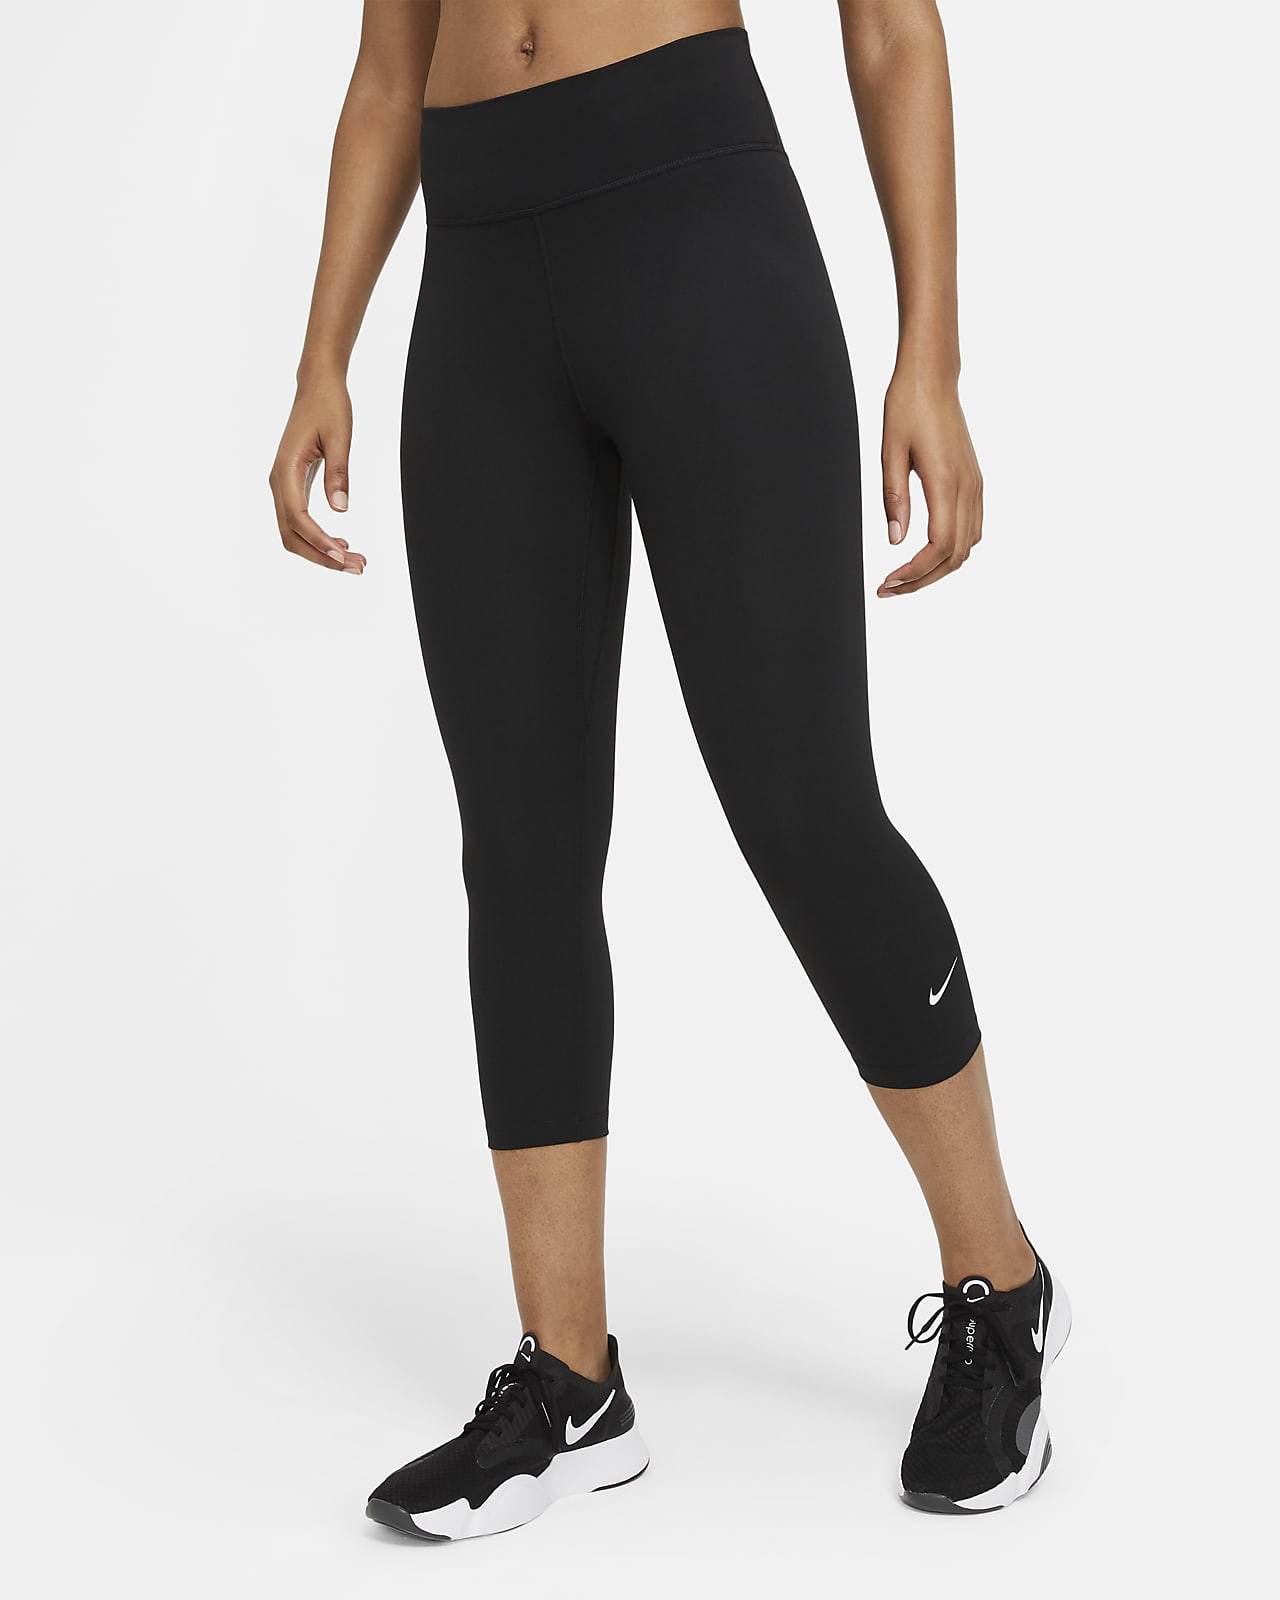 Nike One Caprilegging met halfhoge taille voor dames